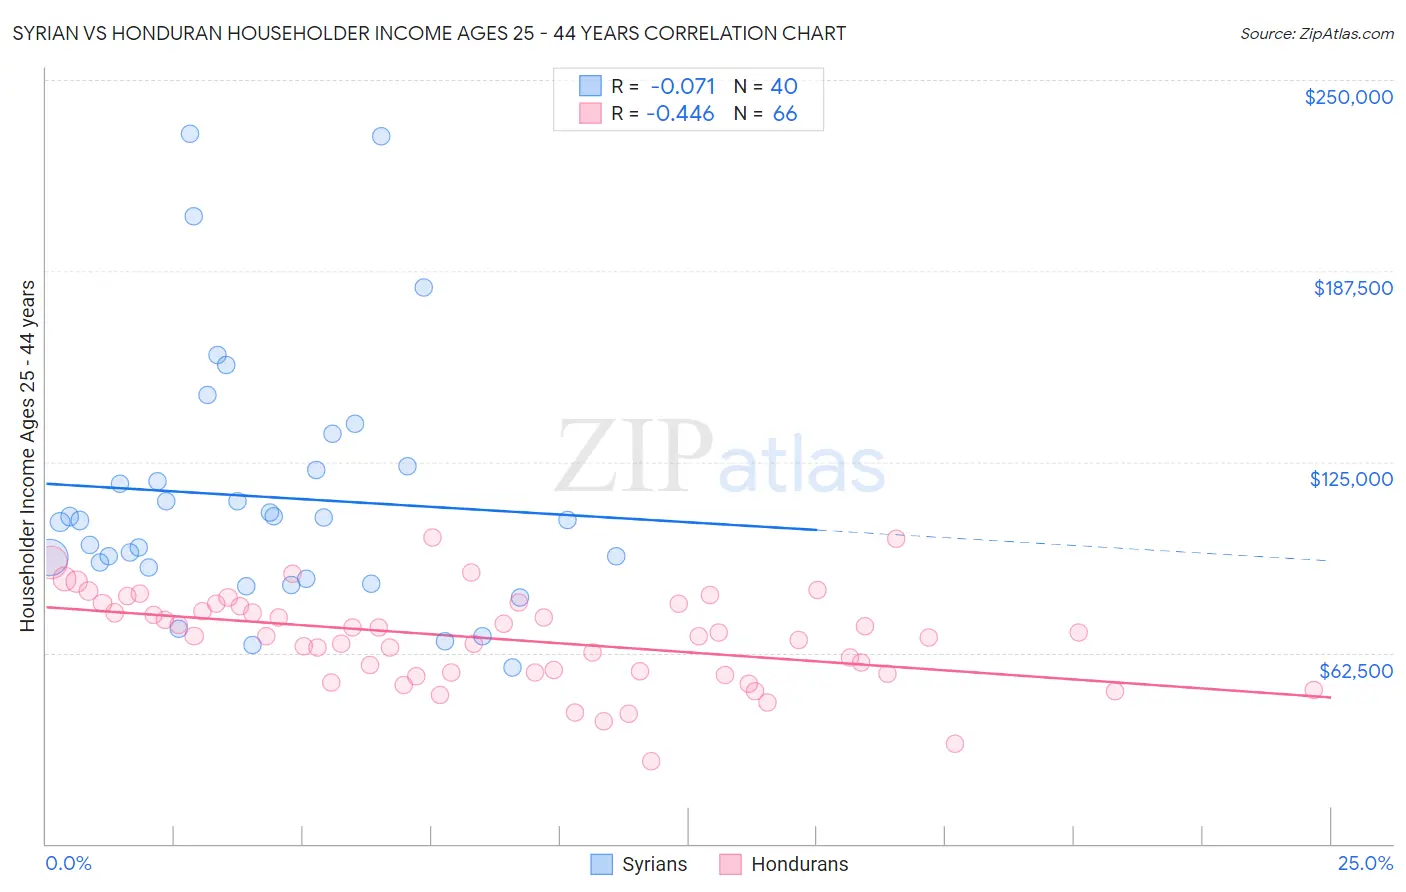 Syrian vs Honduran Householder Income Ages 25 - 44 years